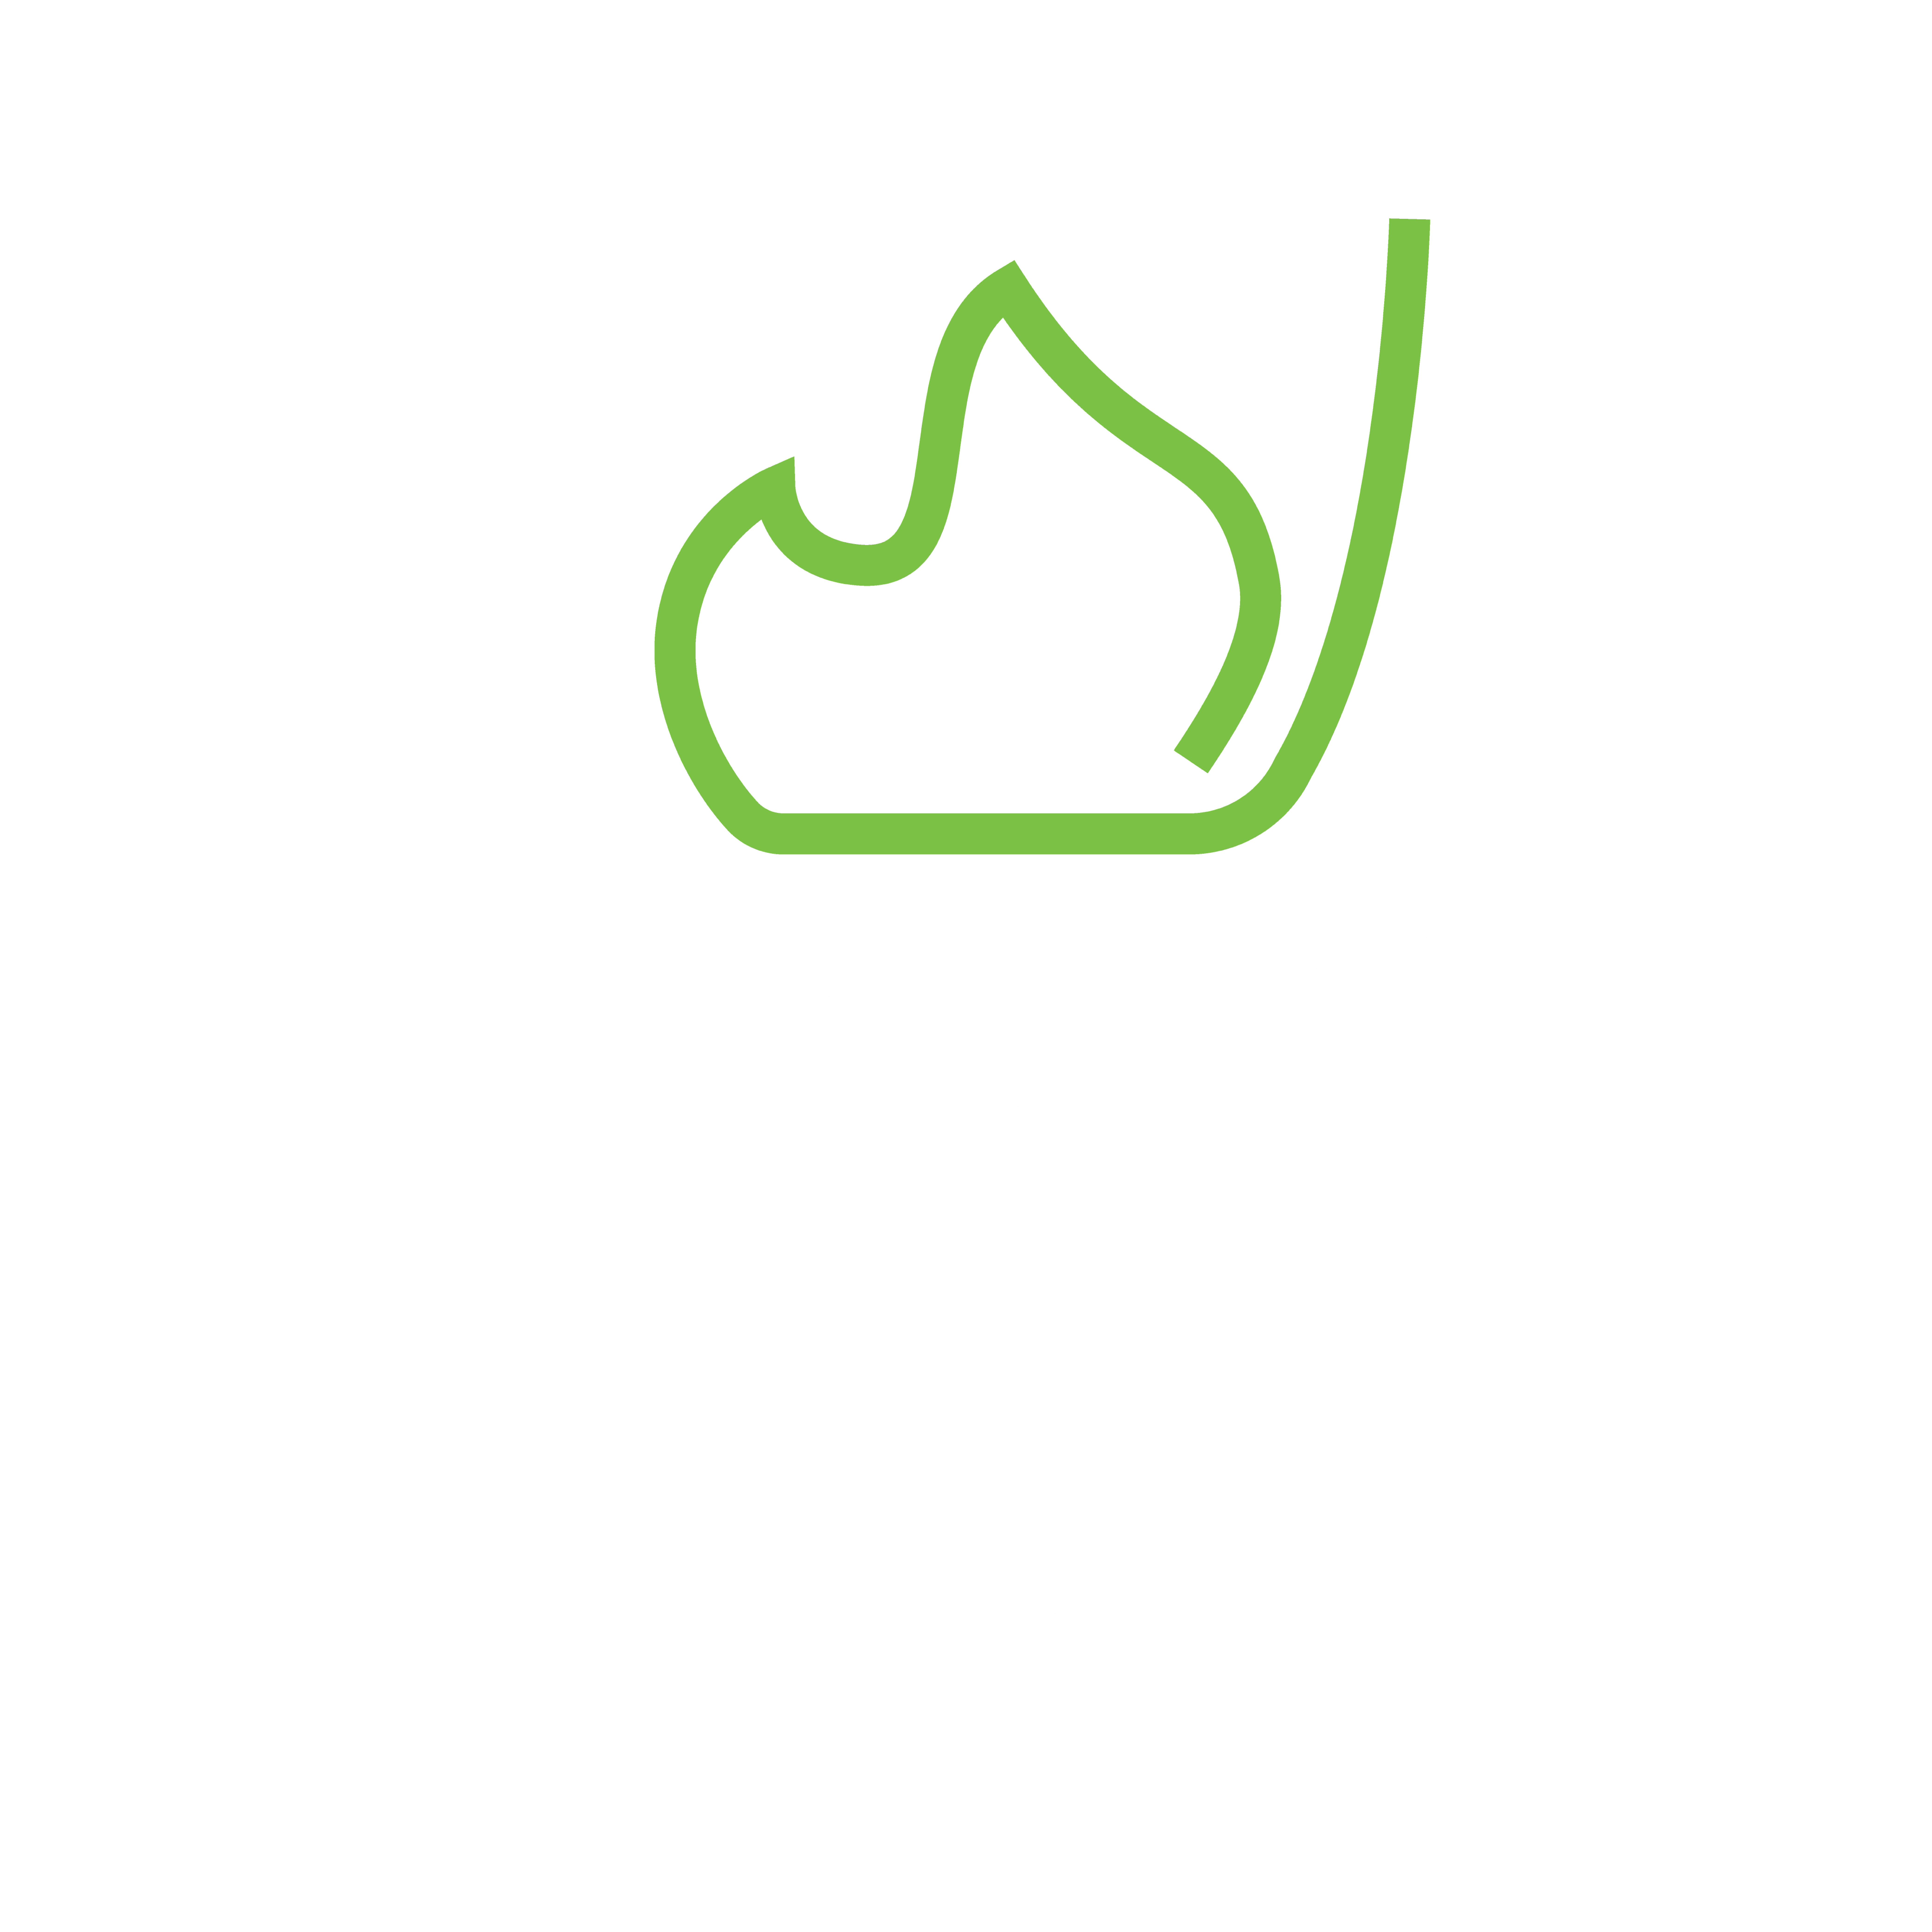 Social justice logo